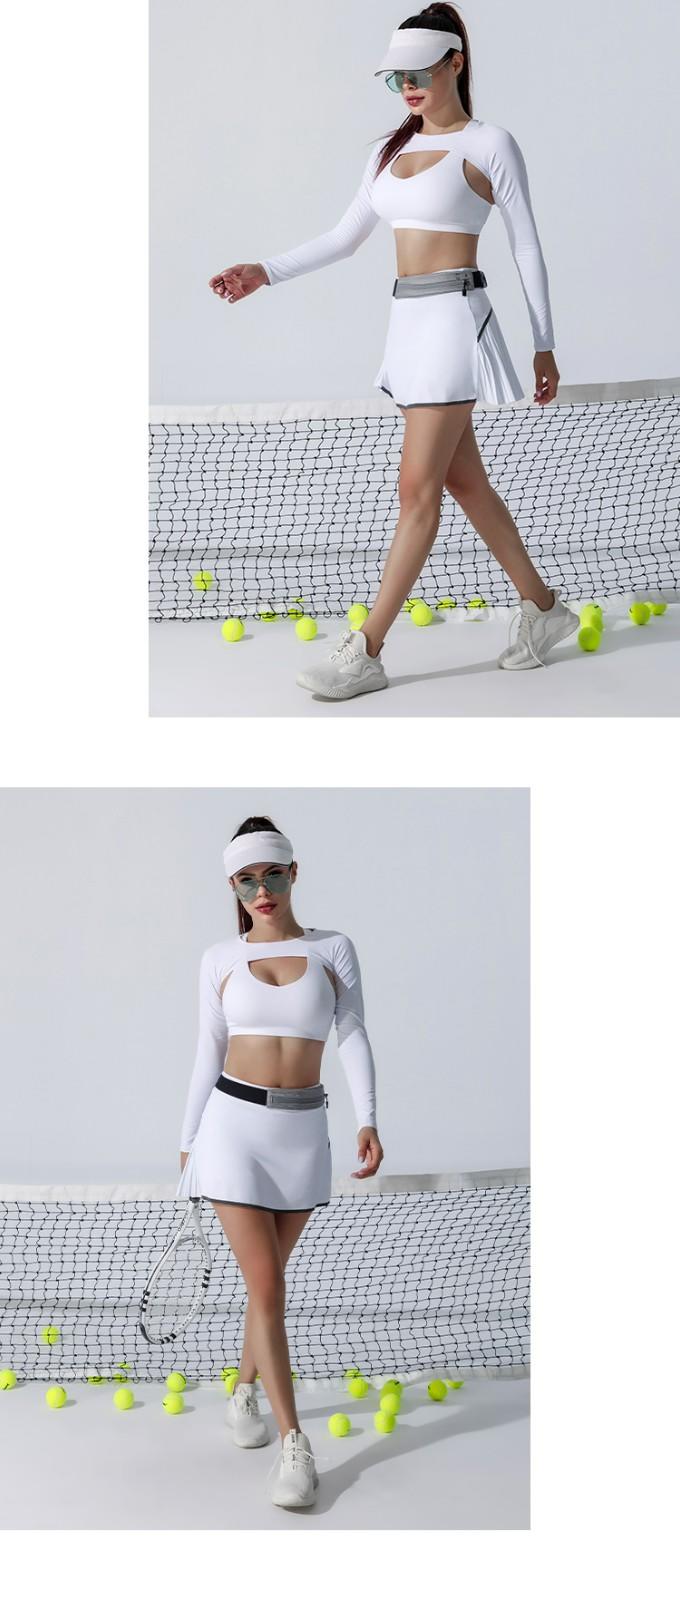 INGOR tennis wear ladies type for women